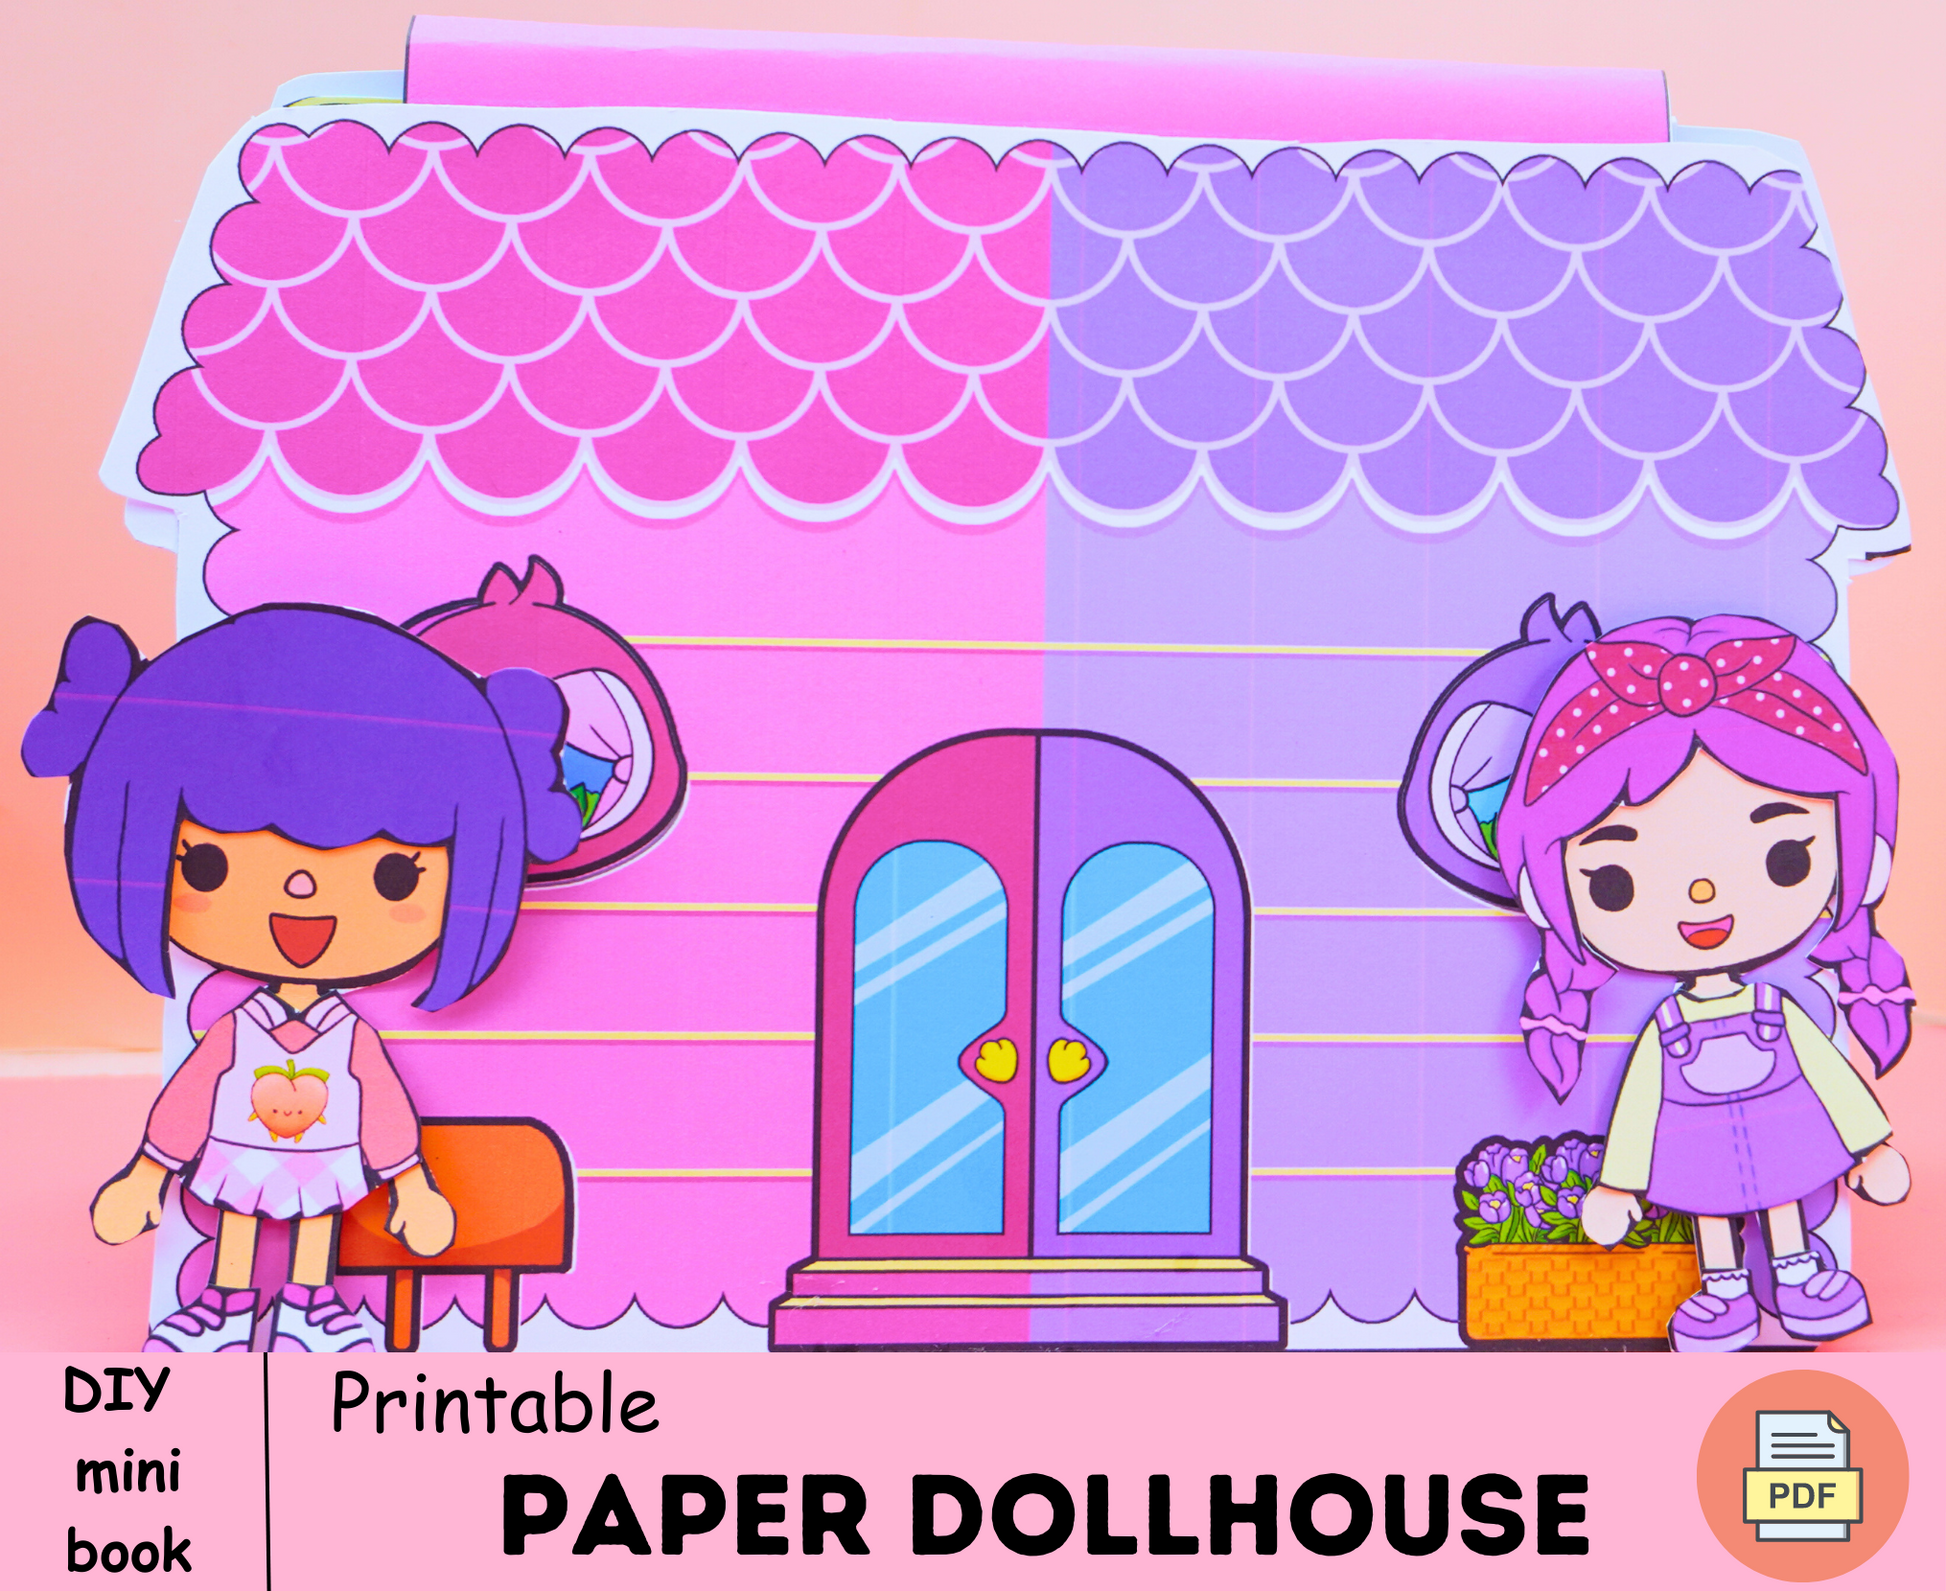 Making toca boca paper dolls